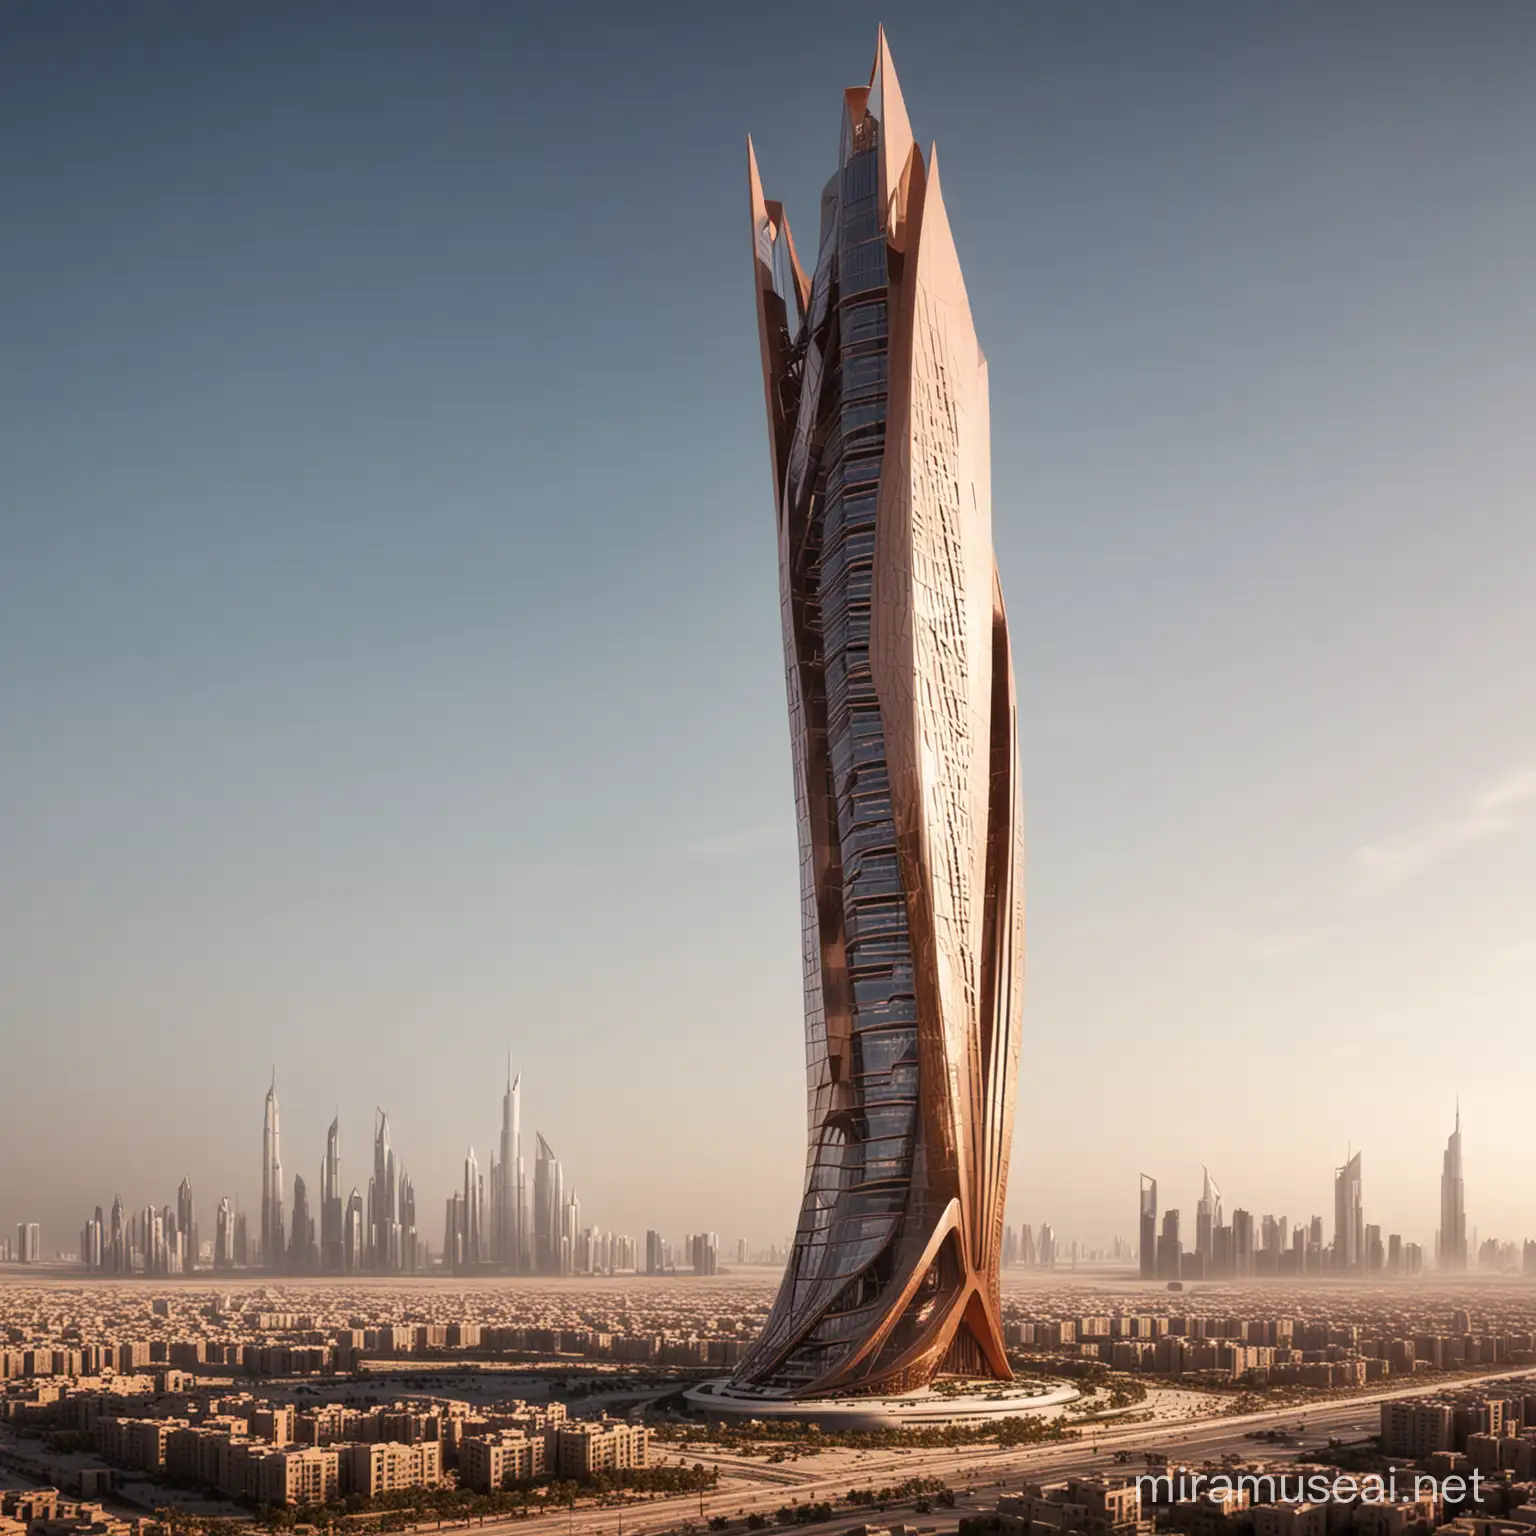 Zaha Hadid Inspired Copper Tower Sculpture in Dubai